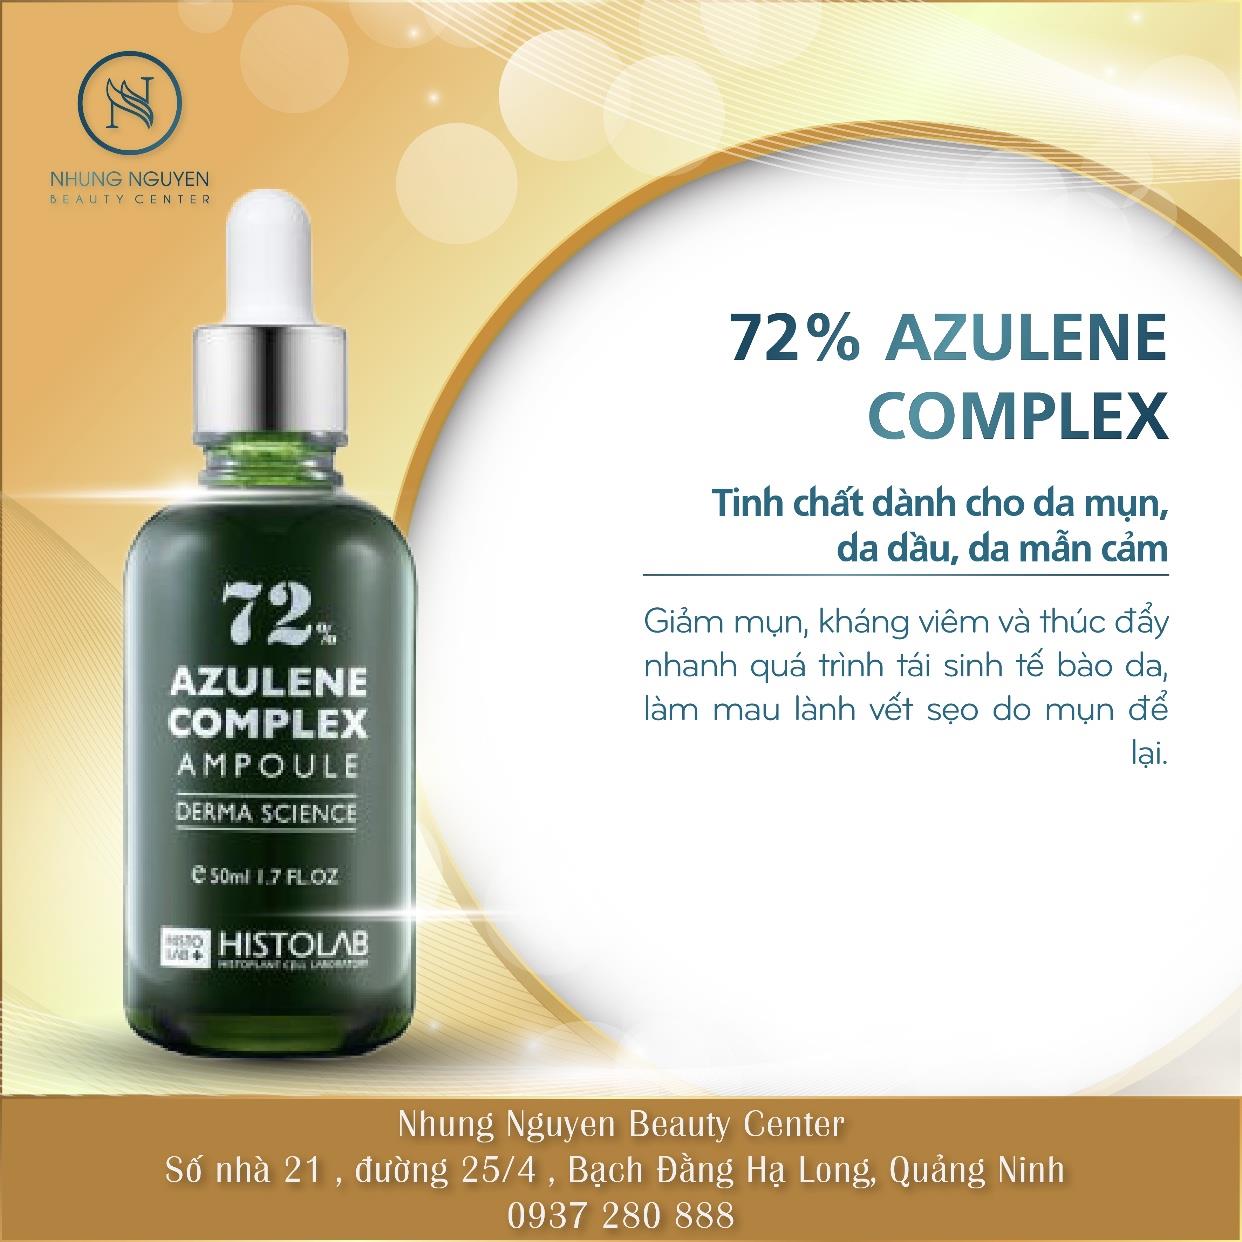  AZULENE COMPLEX AMPOULE 72% 50ML